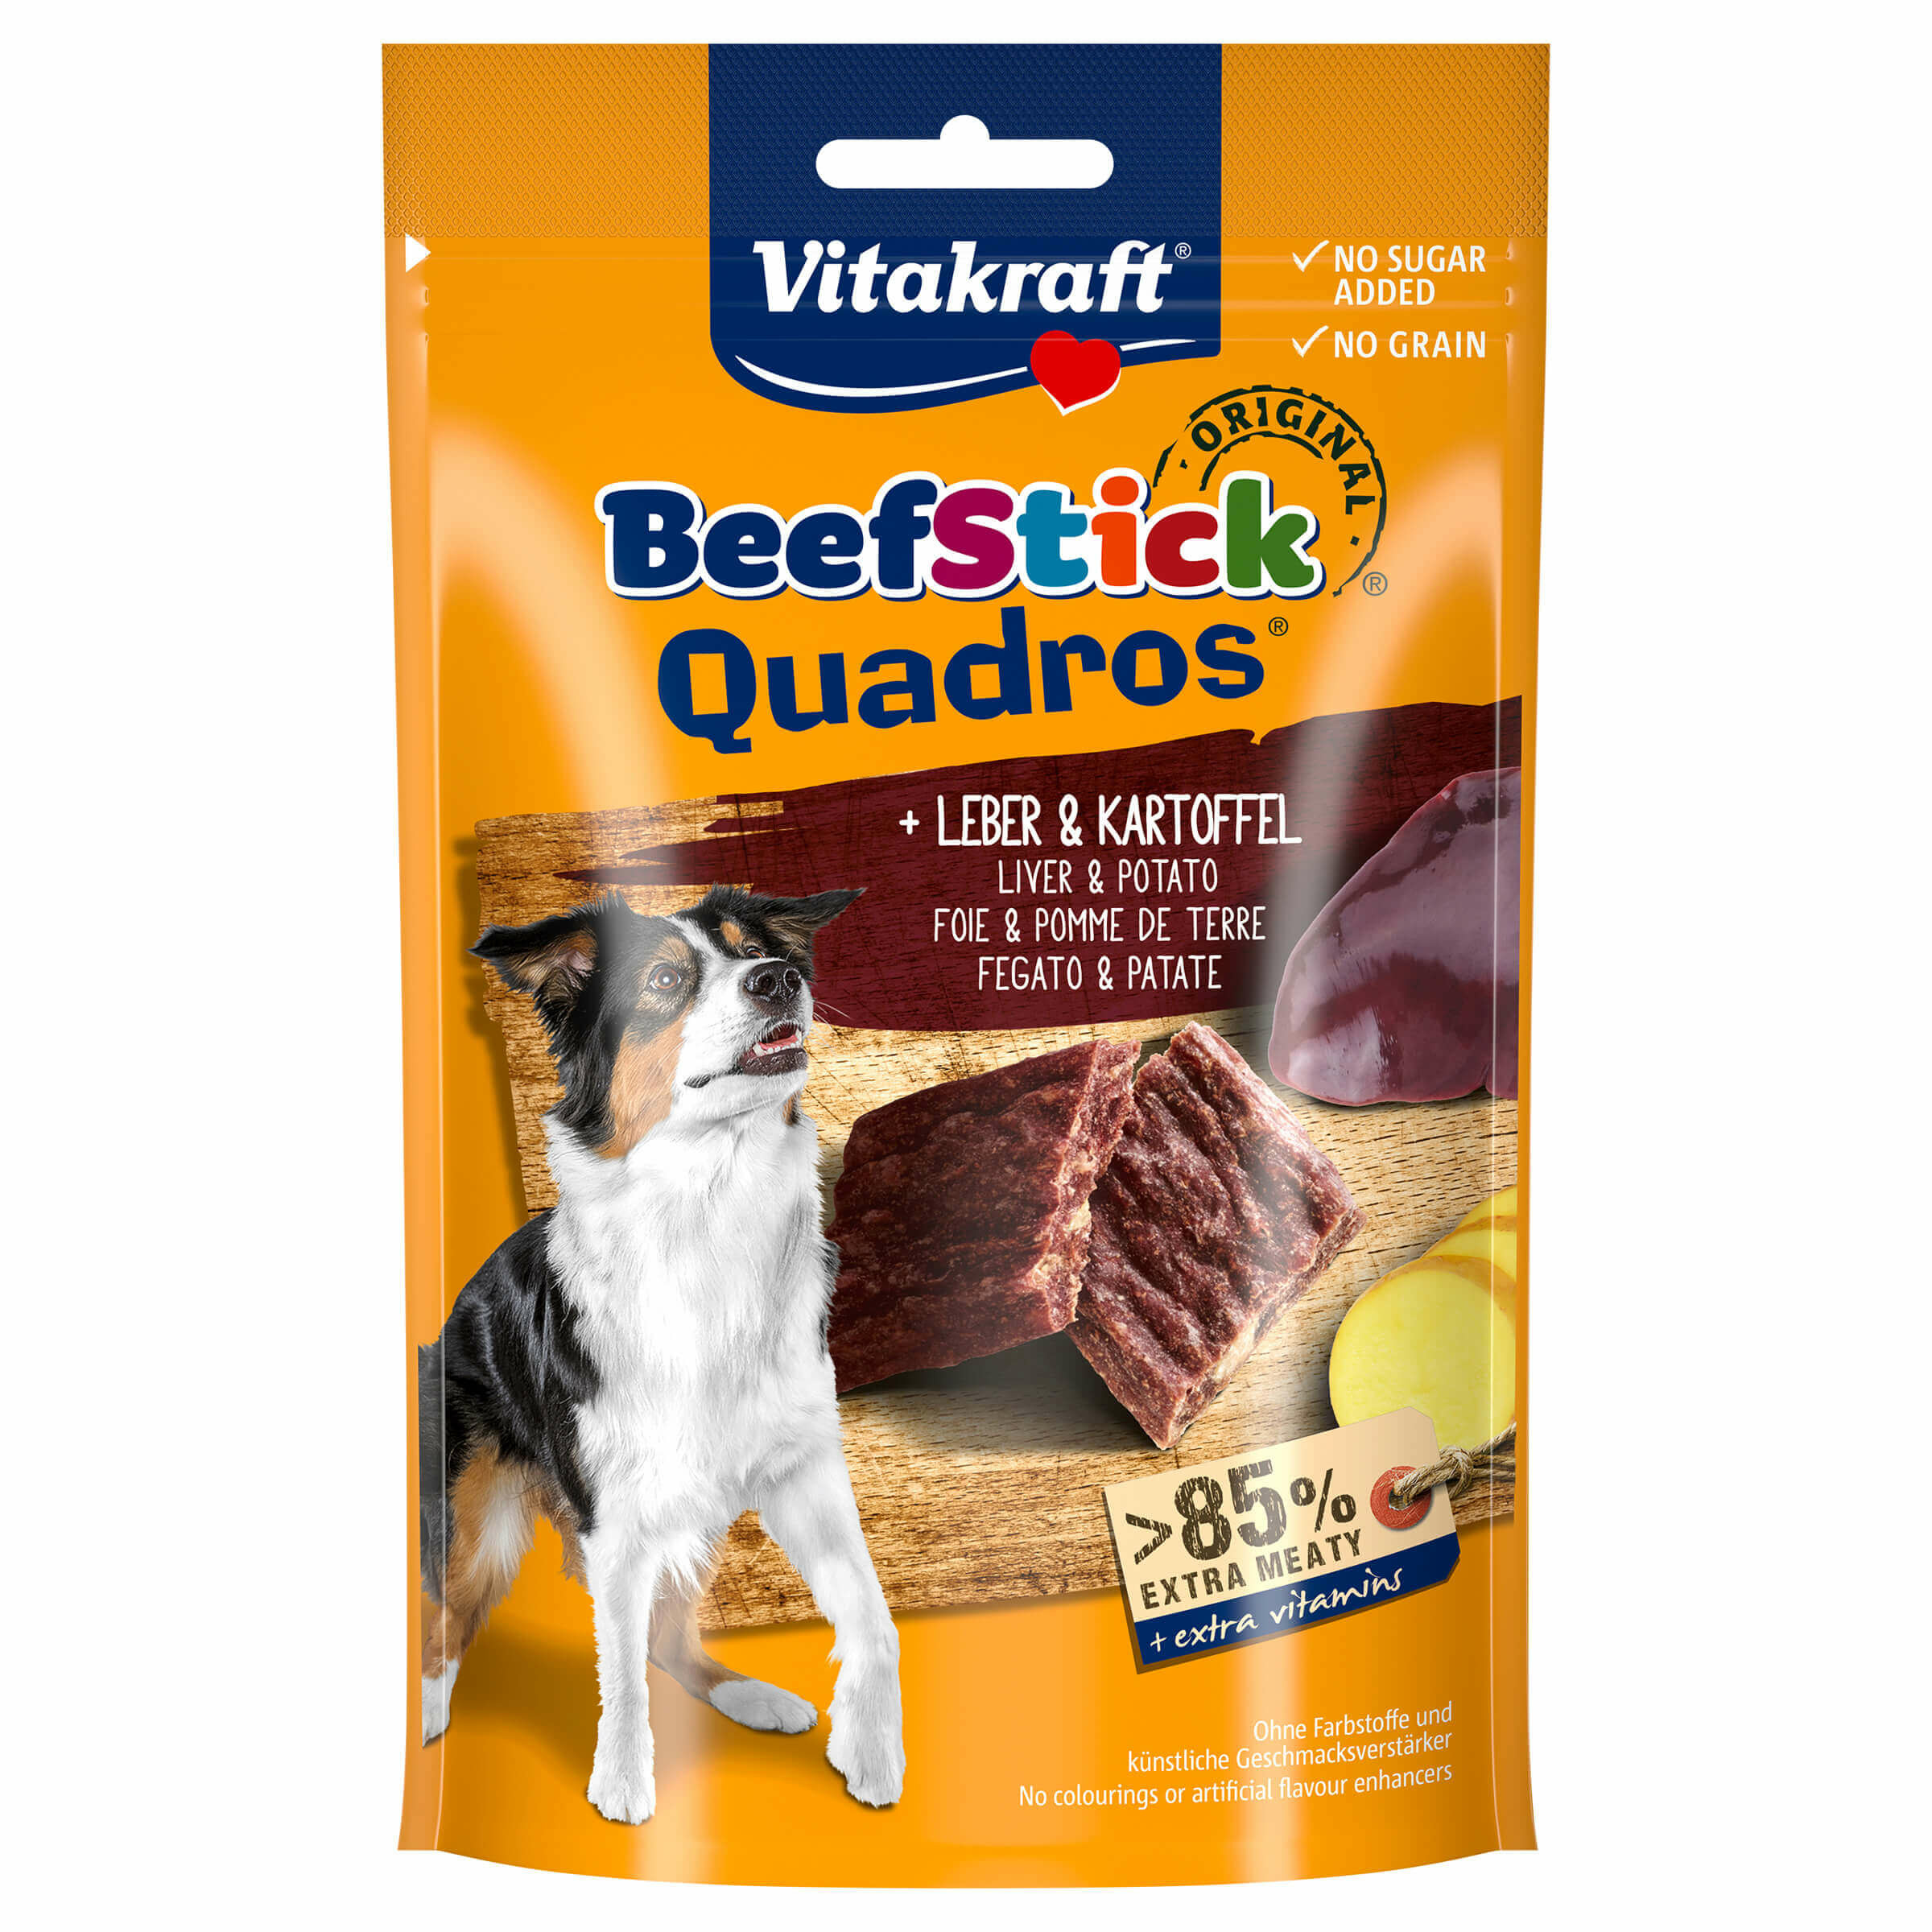 Vitakraft Beef-Stick Quadros Foie & pommes de terre